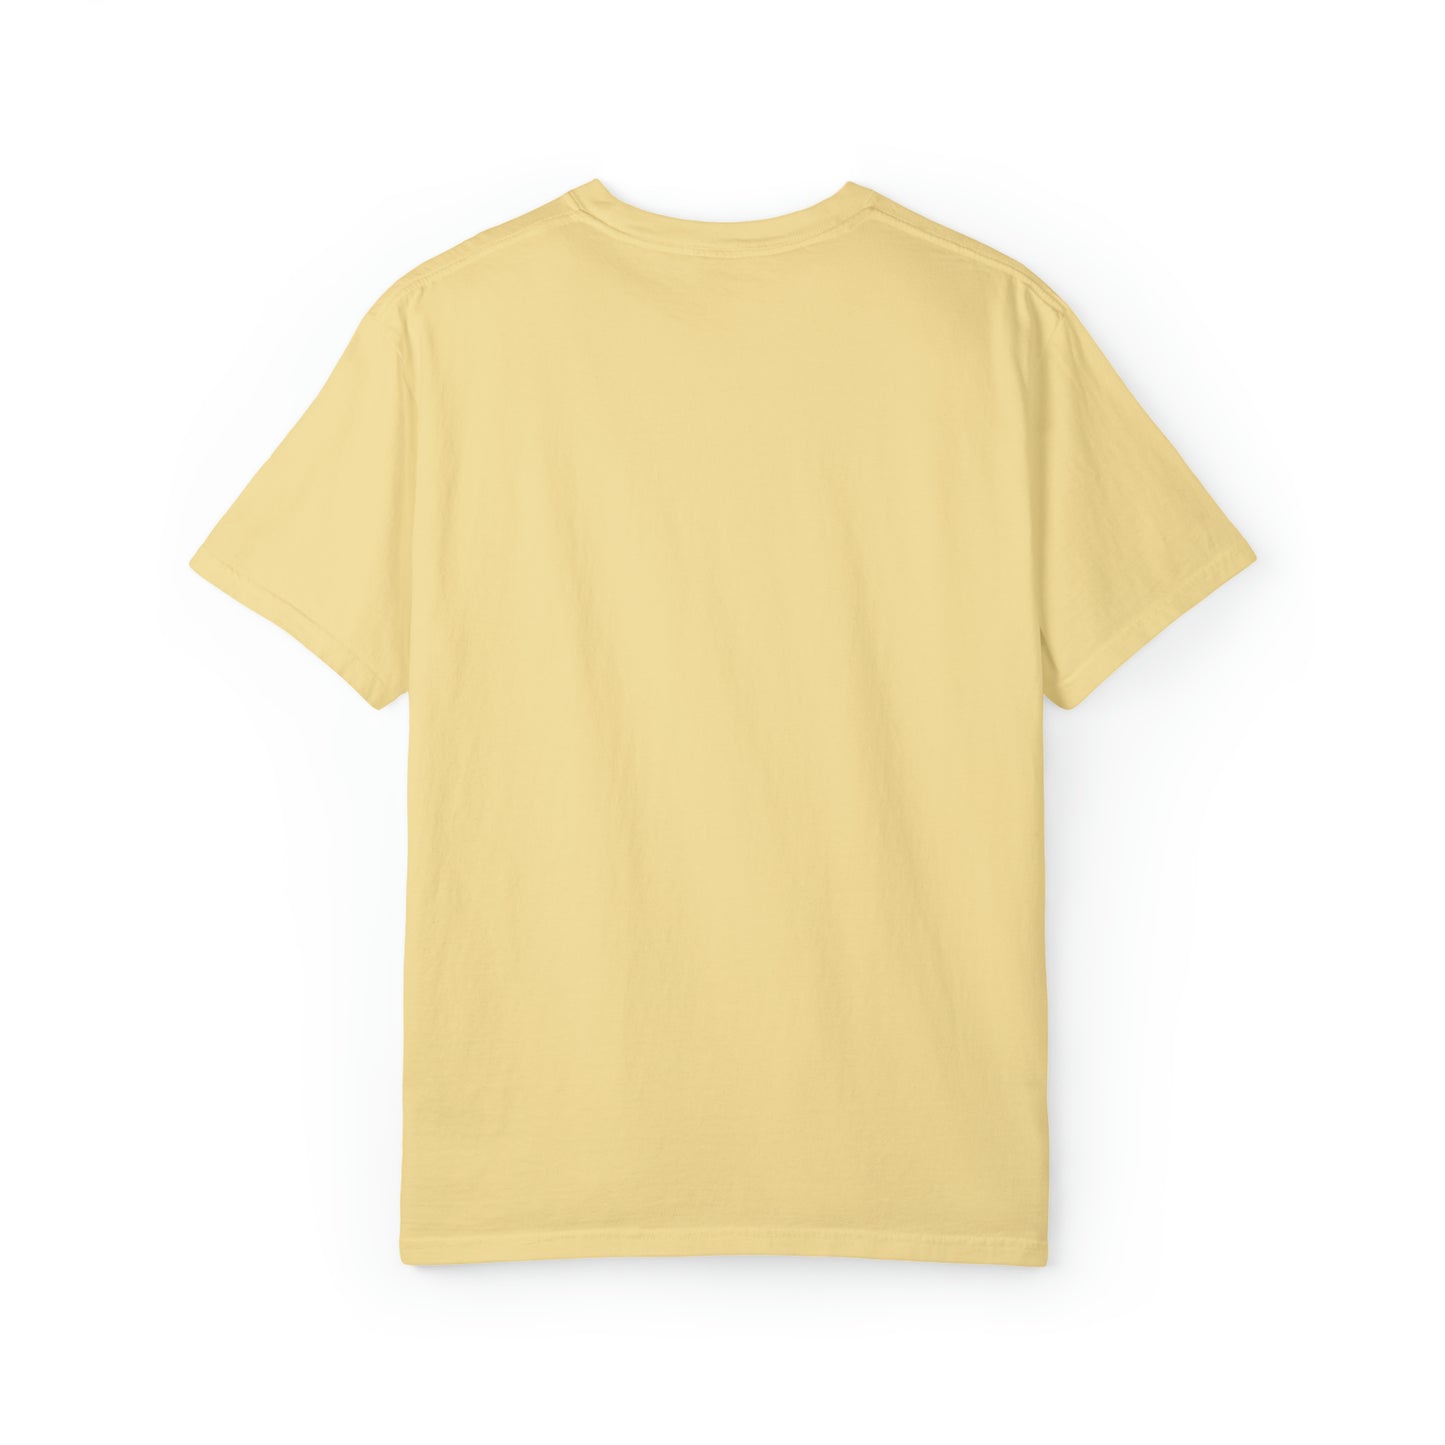 Panda Color Splash T-shirt